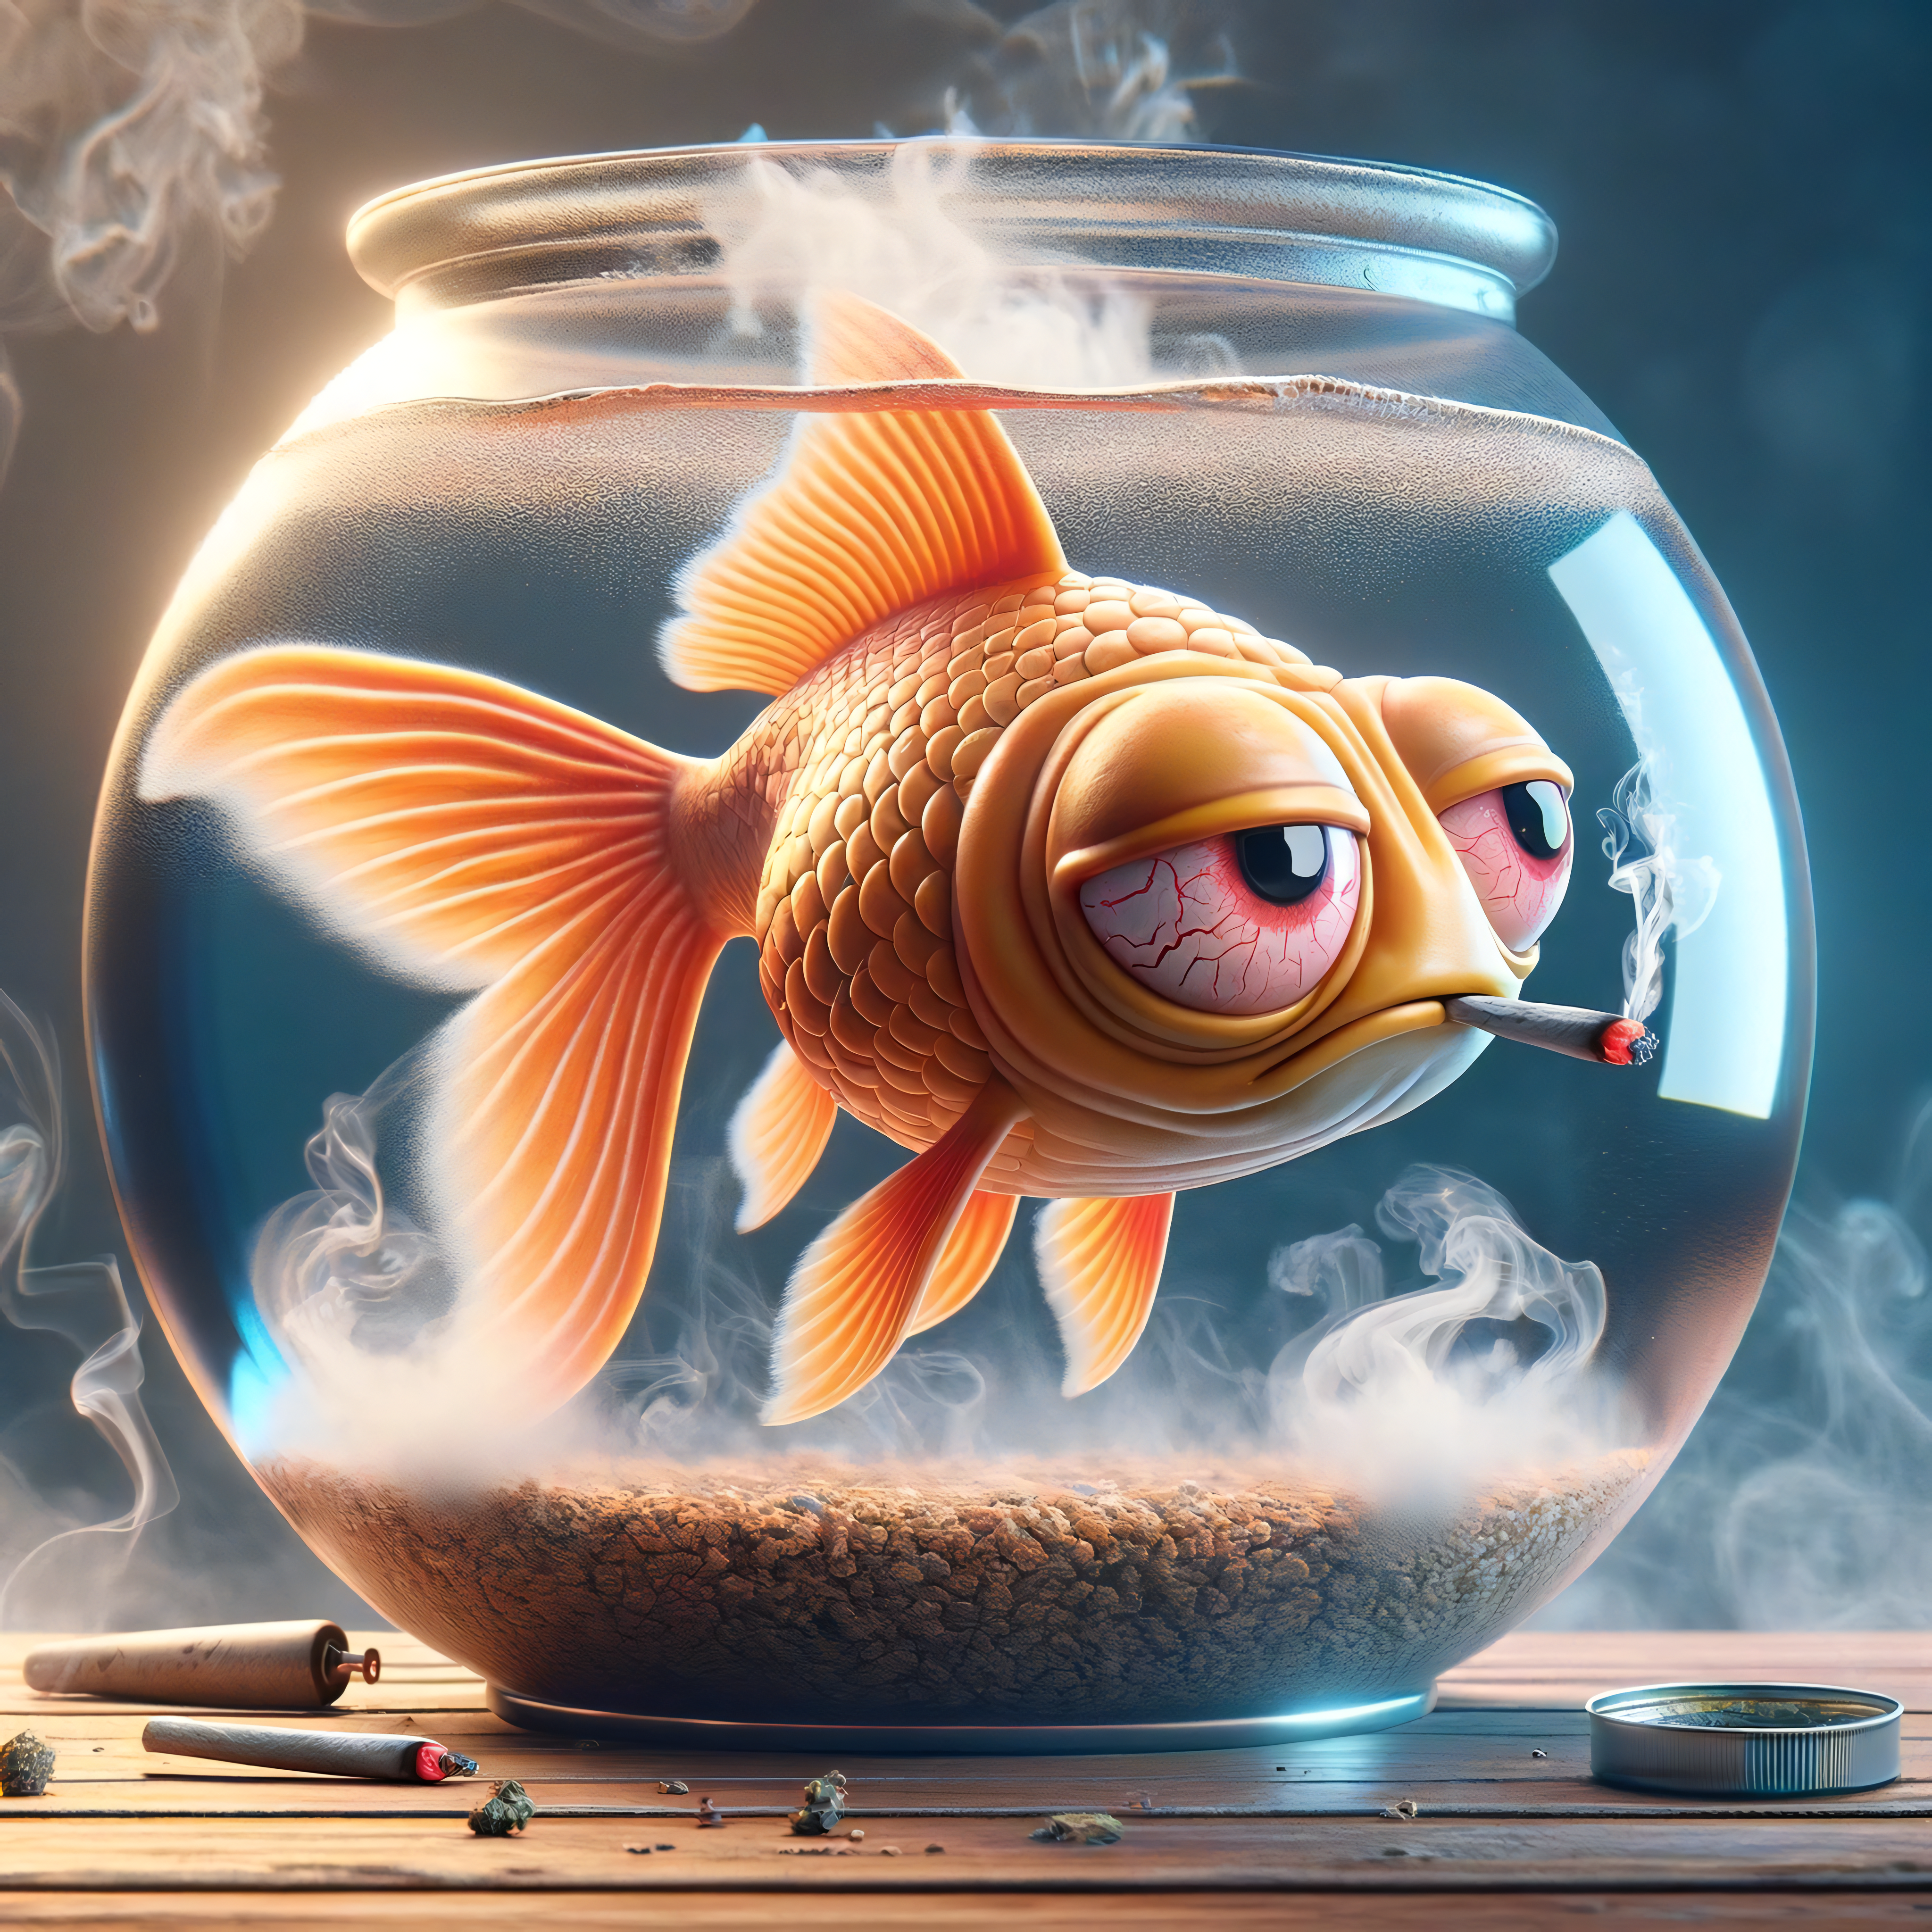 Gary the Goldfish asset